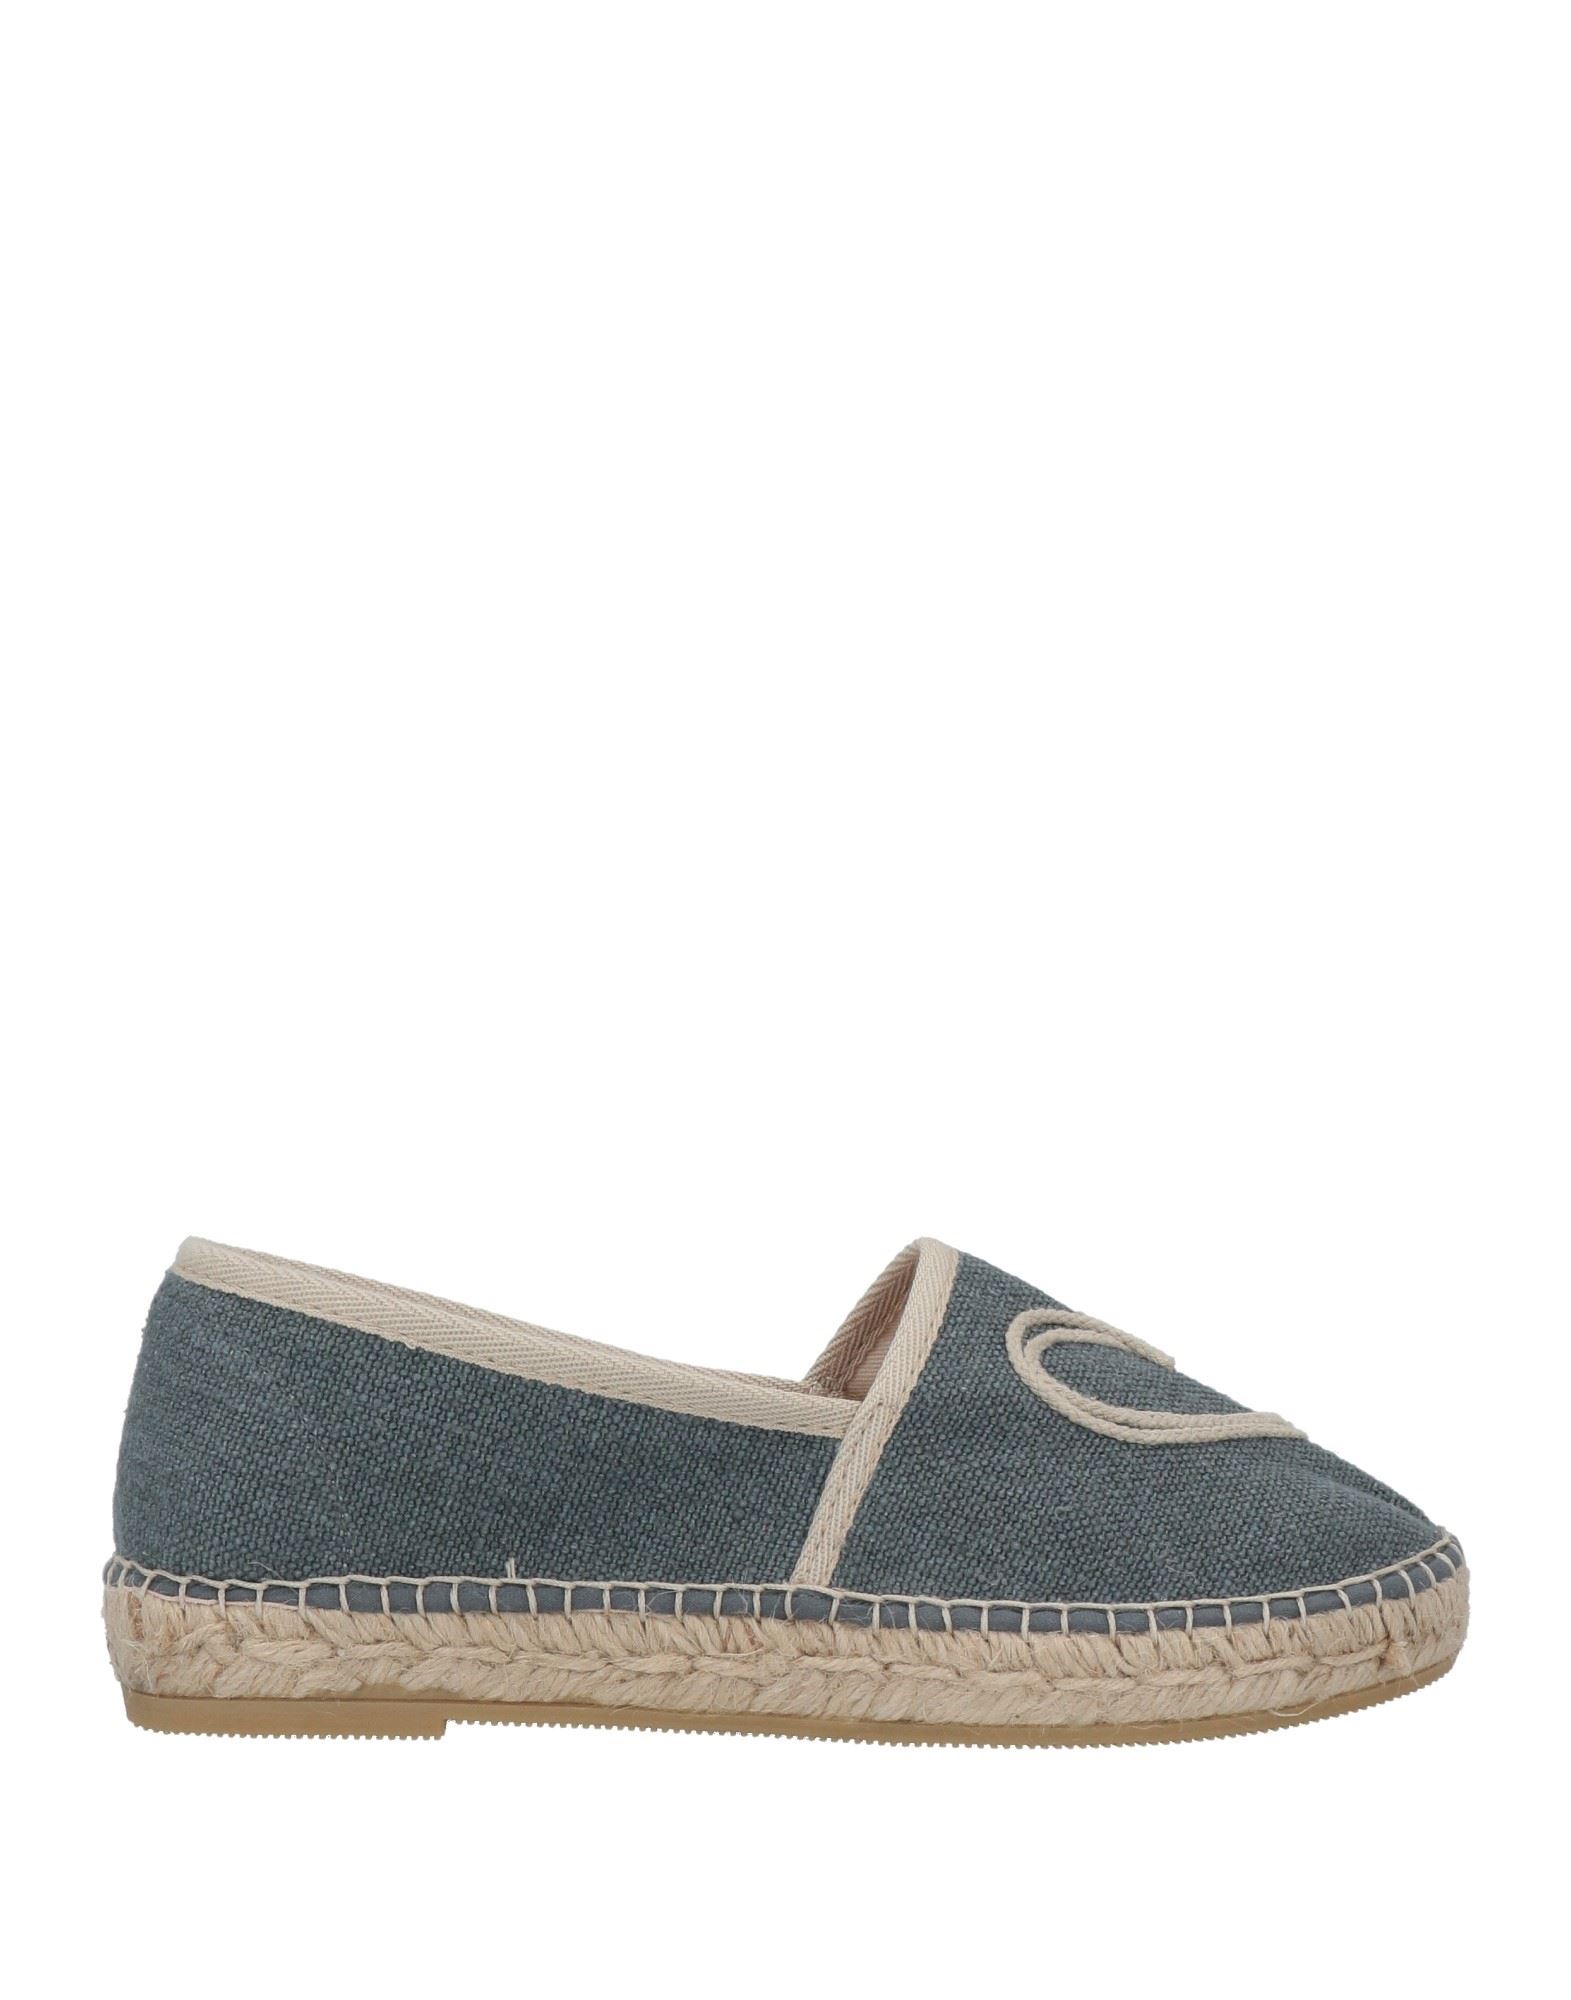 Macarena: grey/blue suede espadrille – Shoes at Last